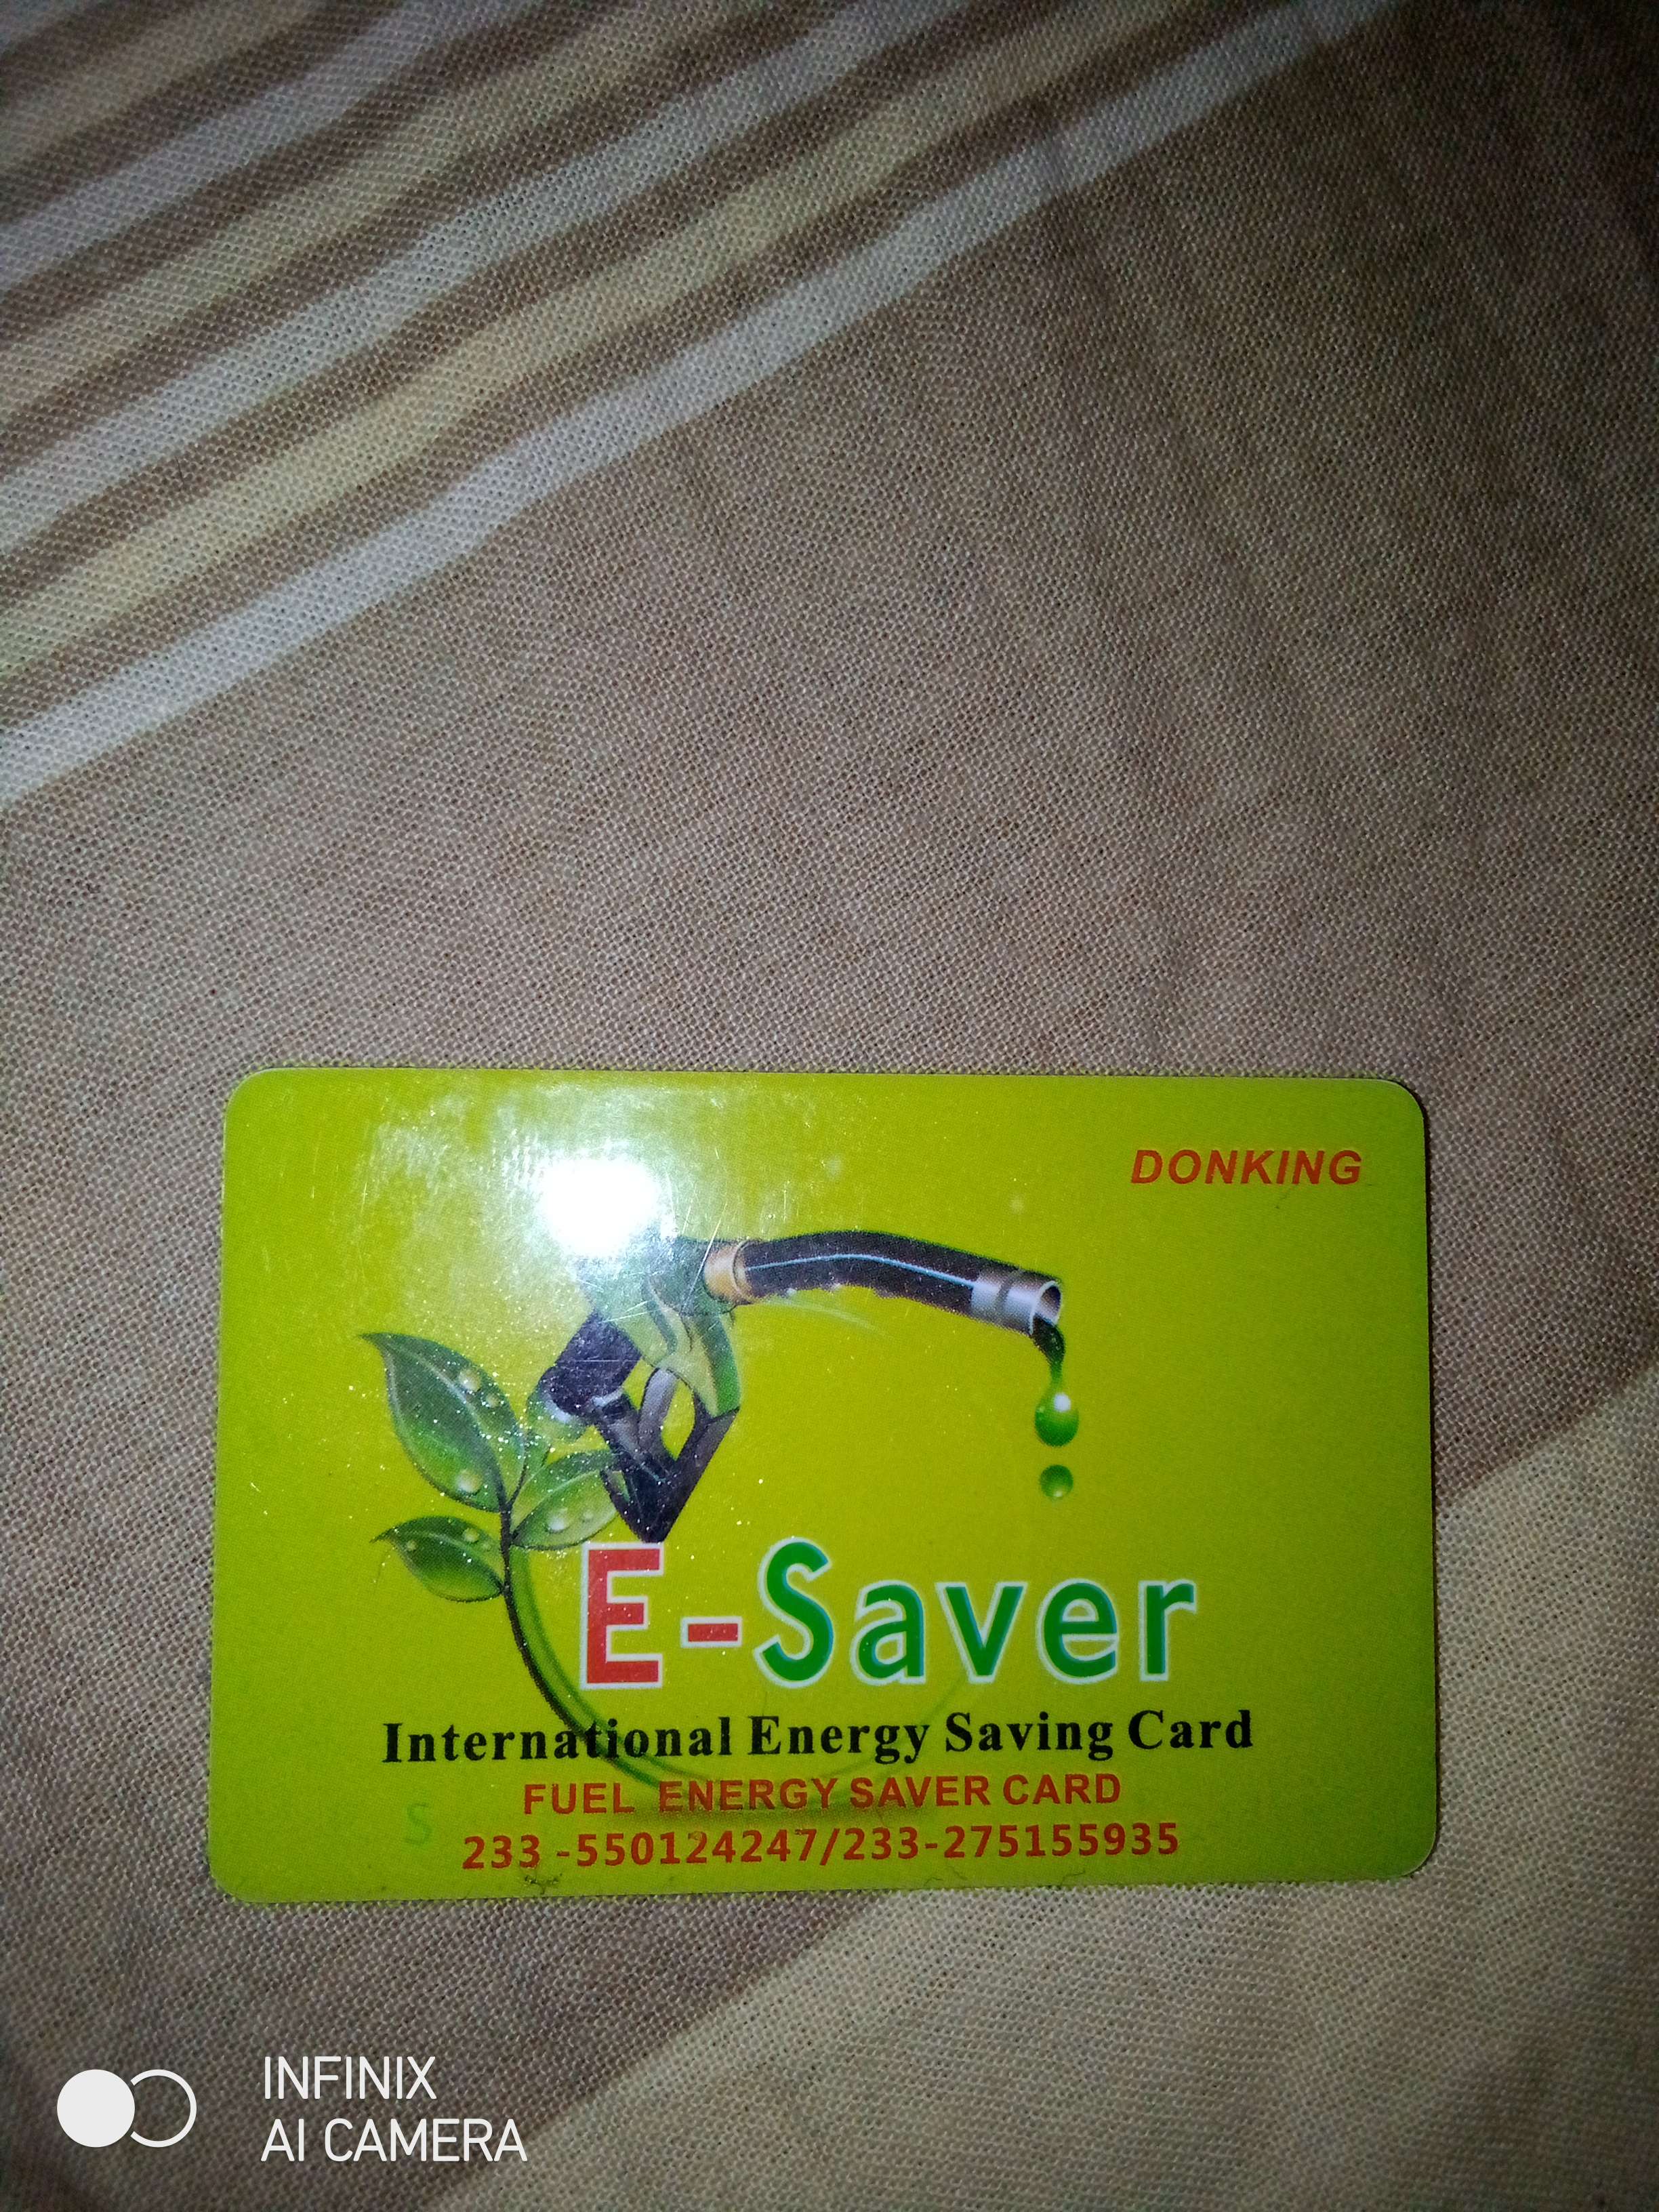 Fuel, diesel, electricity saver cards